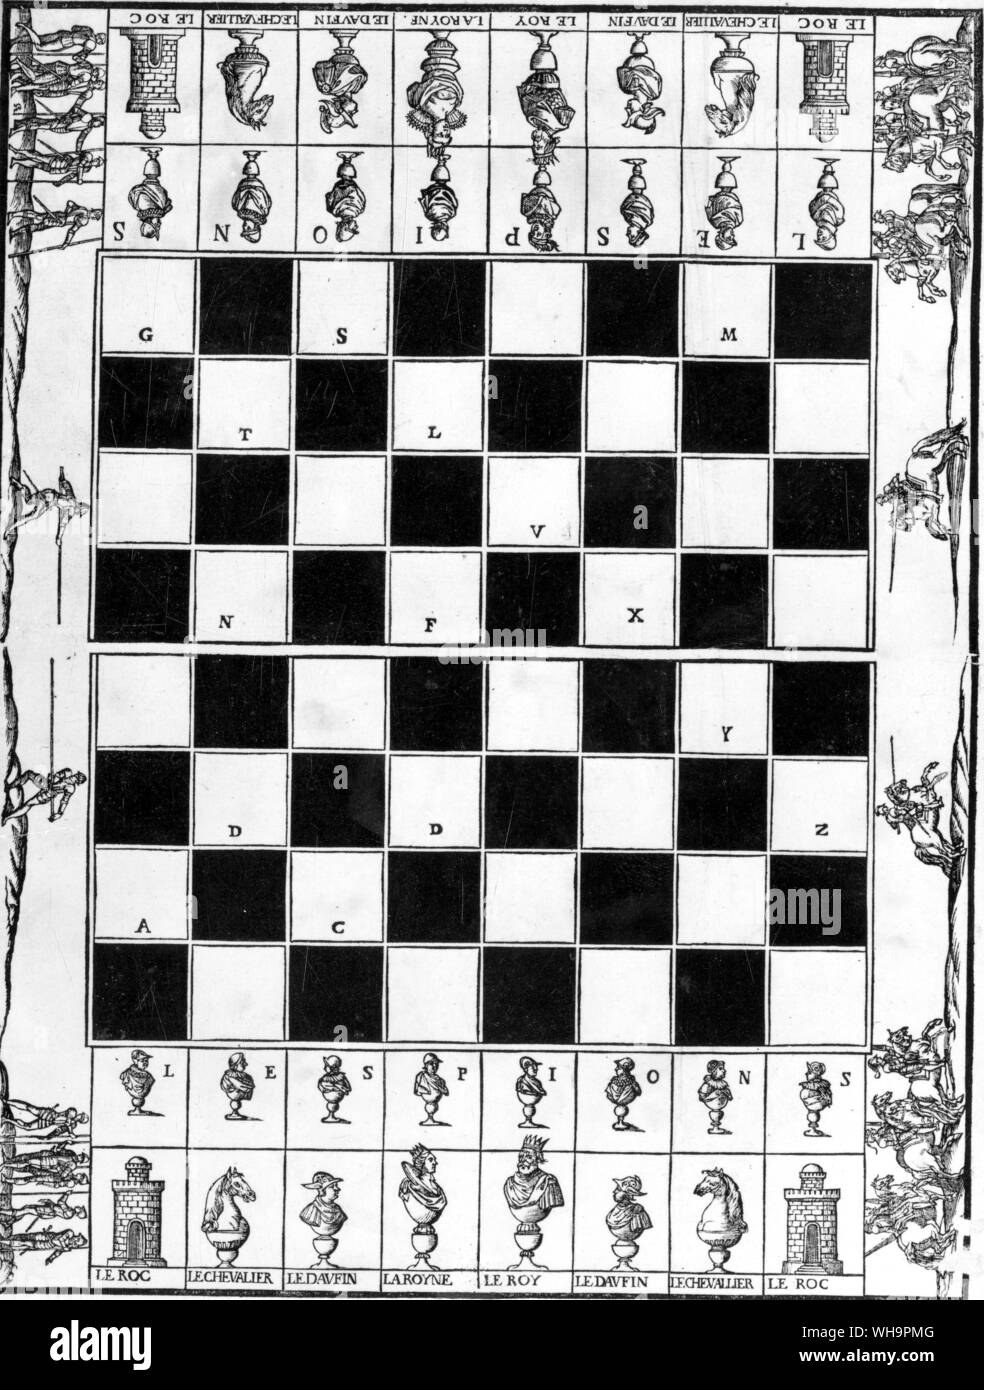 A chess set - engraving Stock Photo